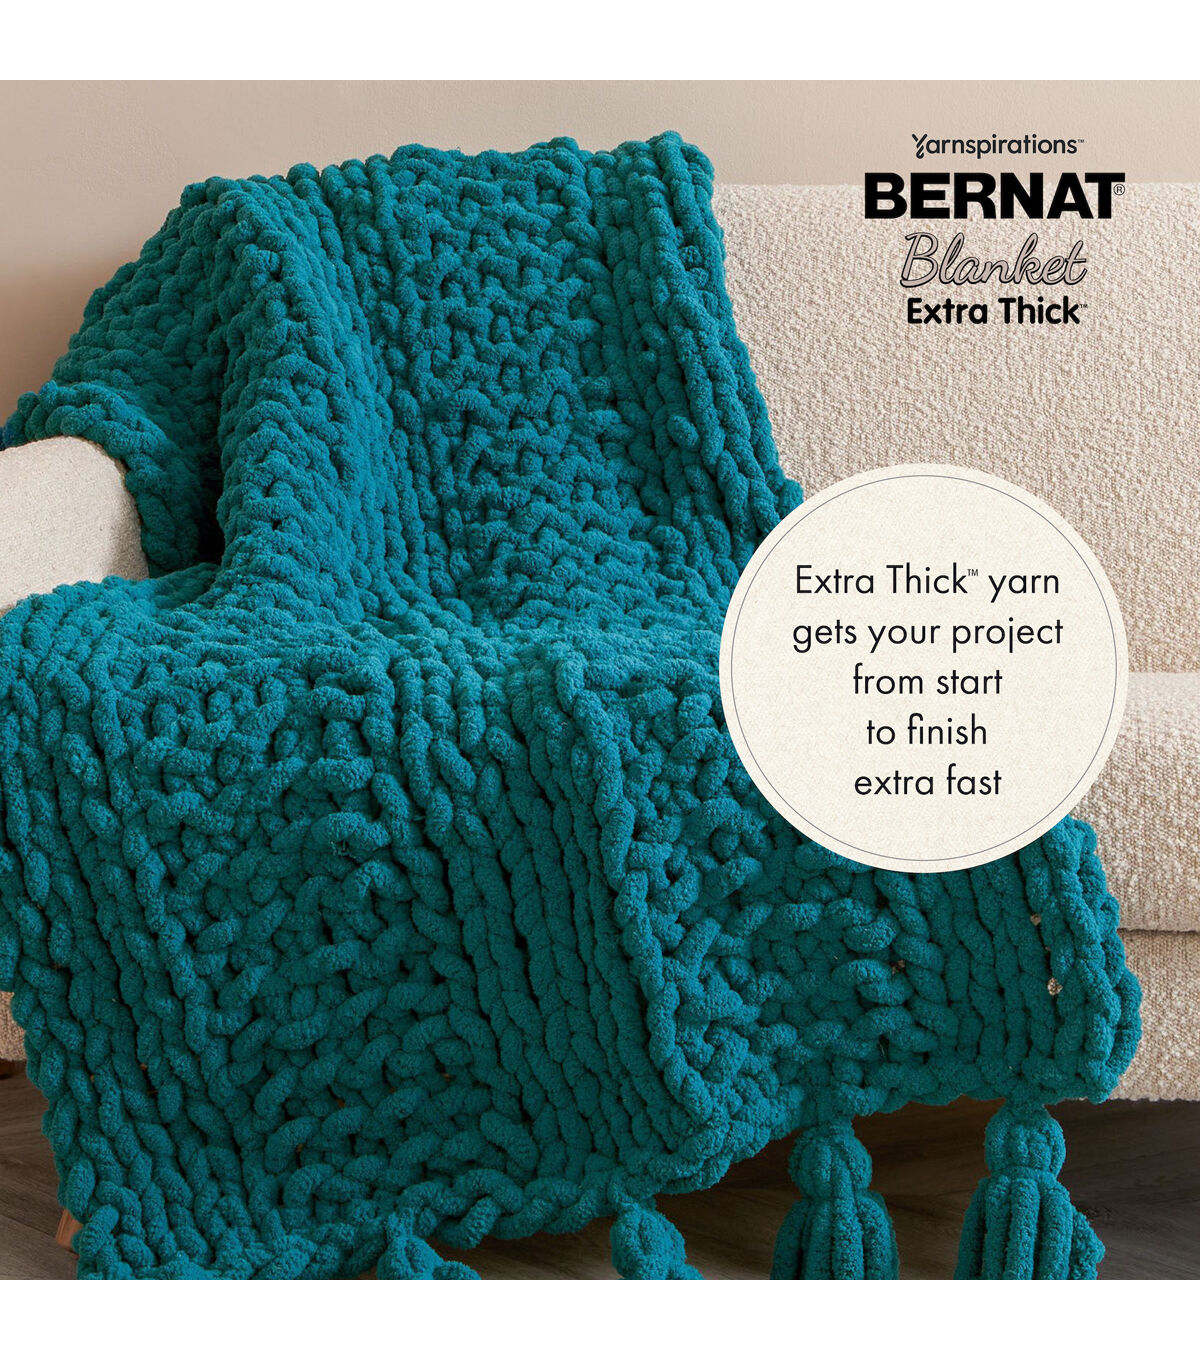 Bernat Blanket Extra Thick Yarn (600g/21.2 oz), Gold